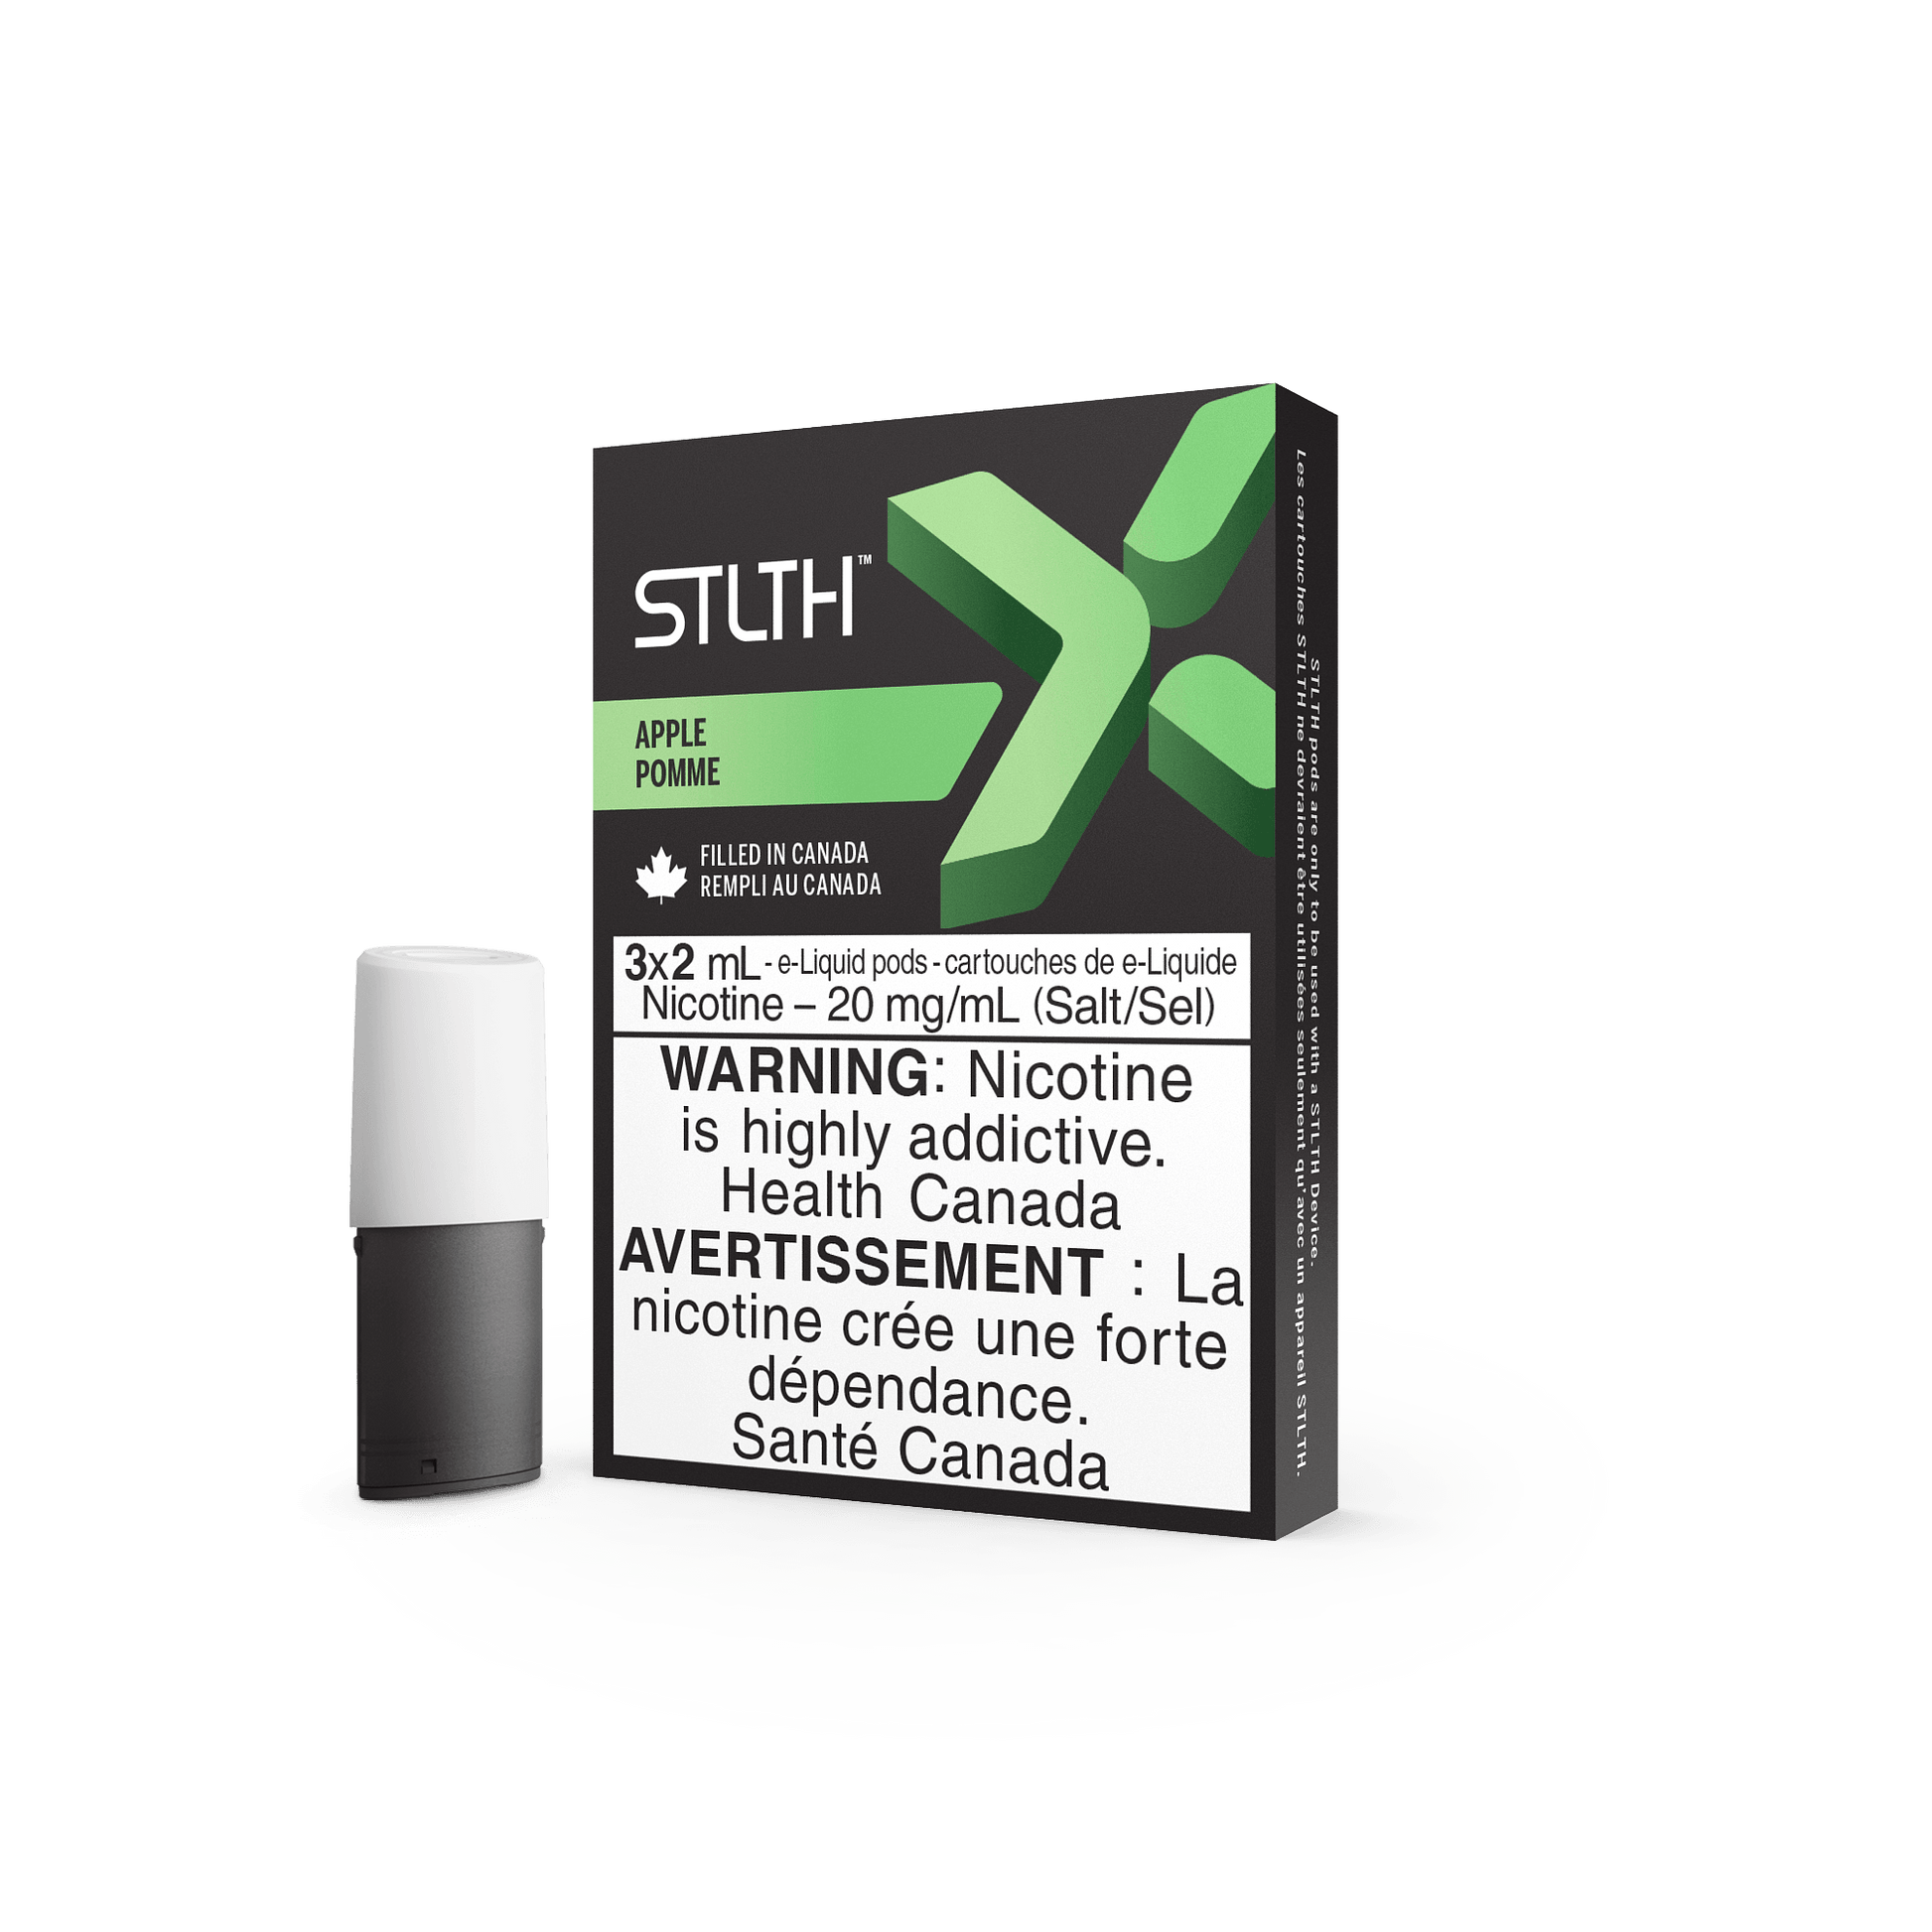 STLTH X - Apple - Vapor Shoppe